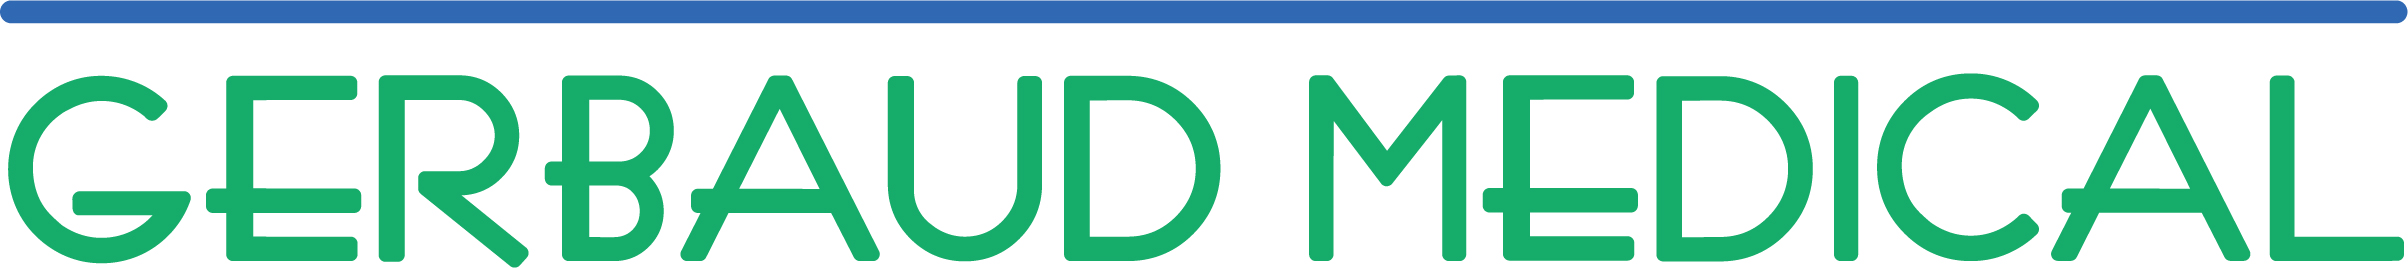 gerbaud medical logo